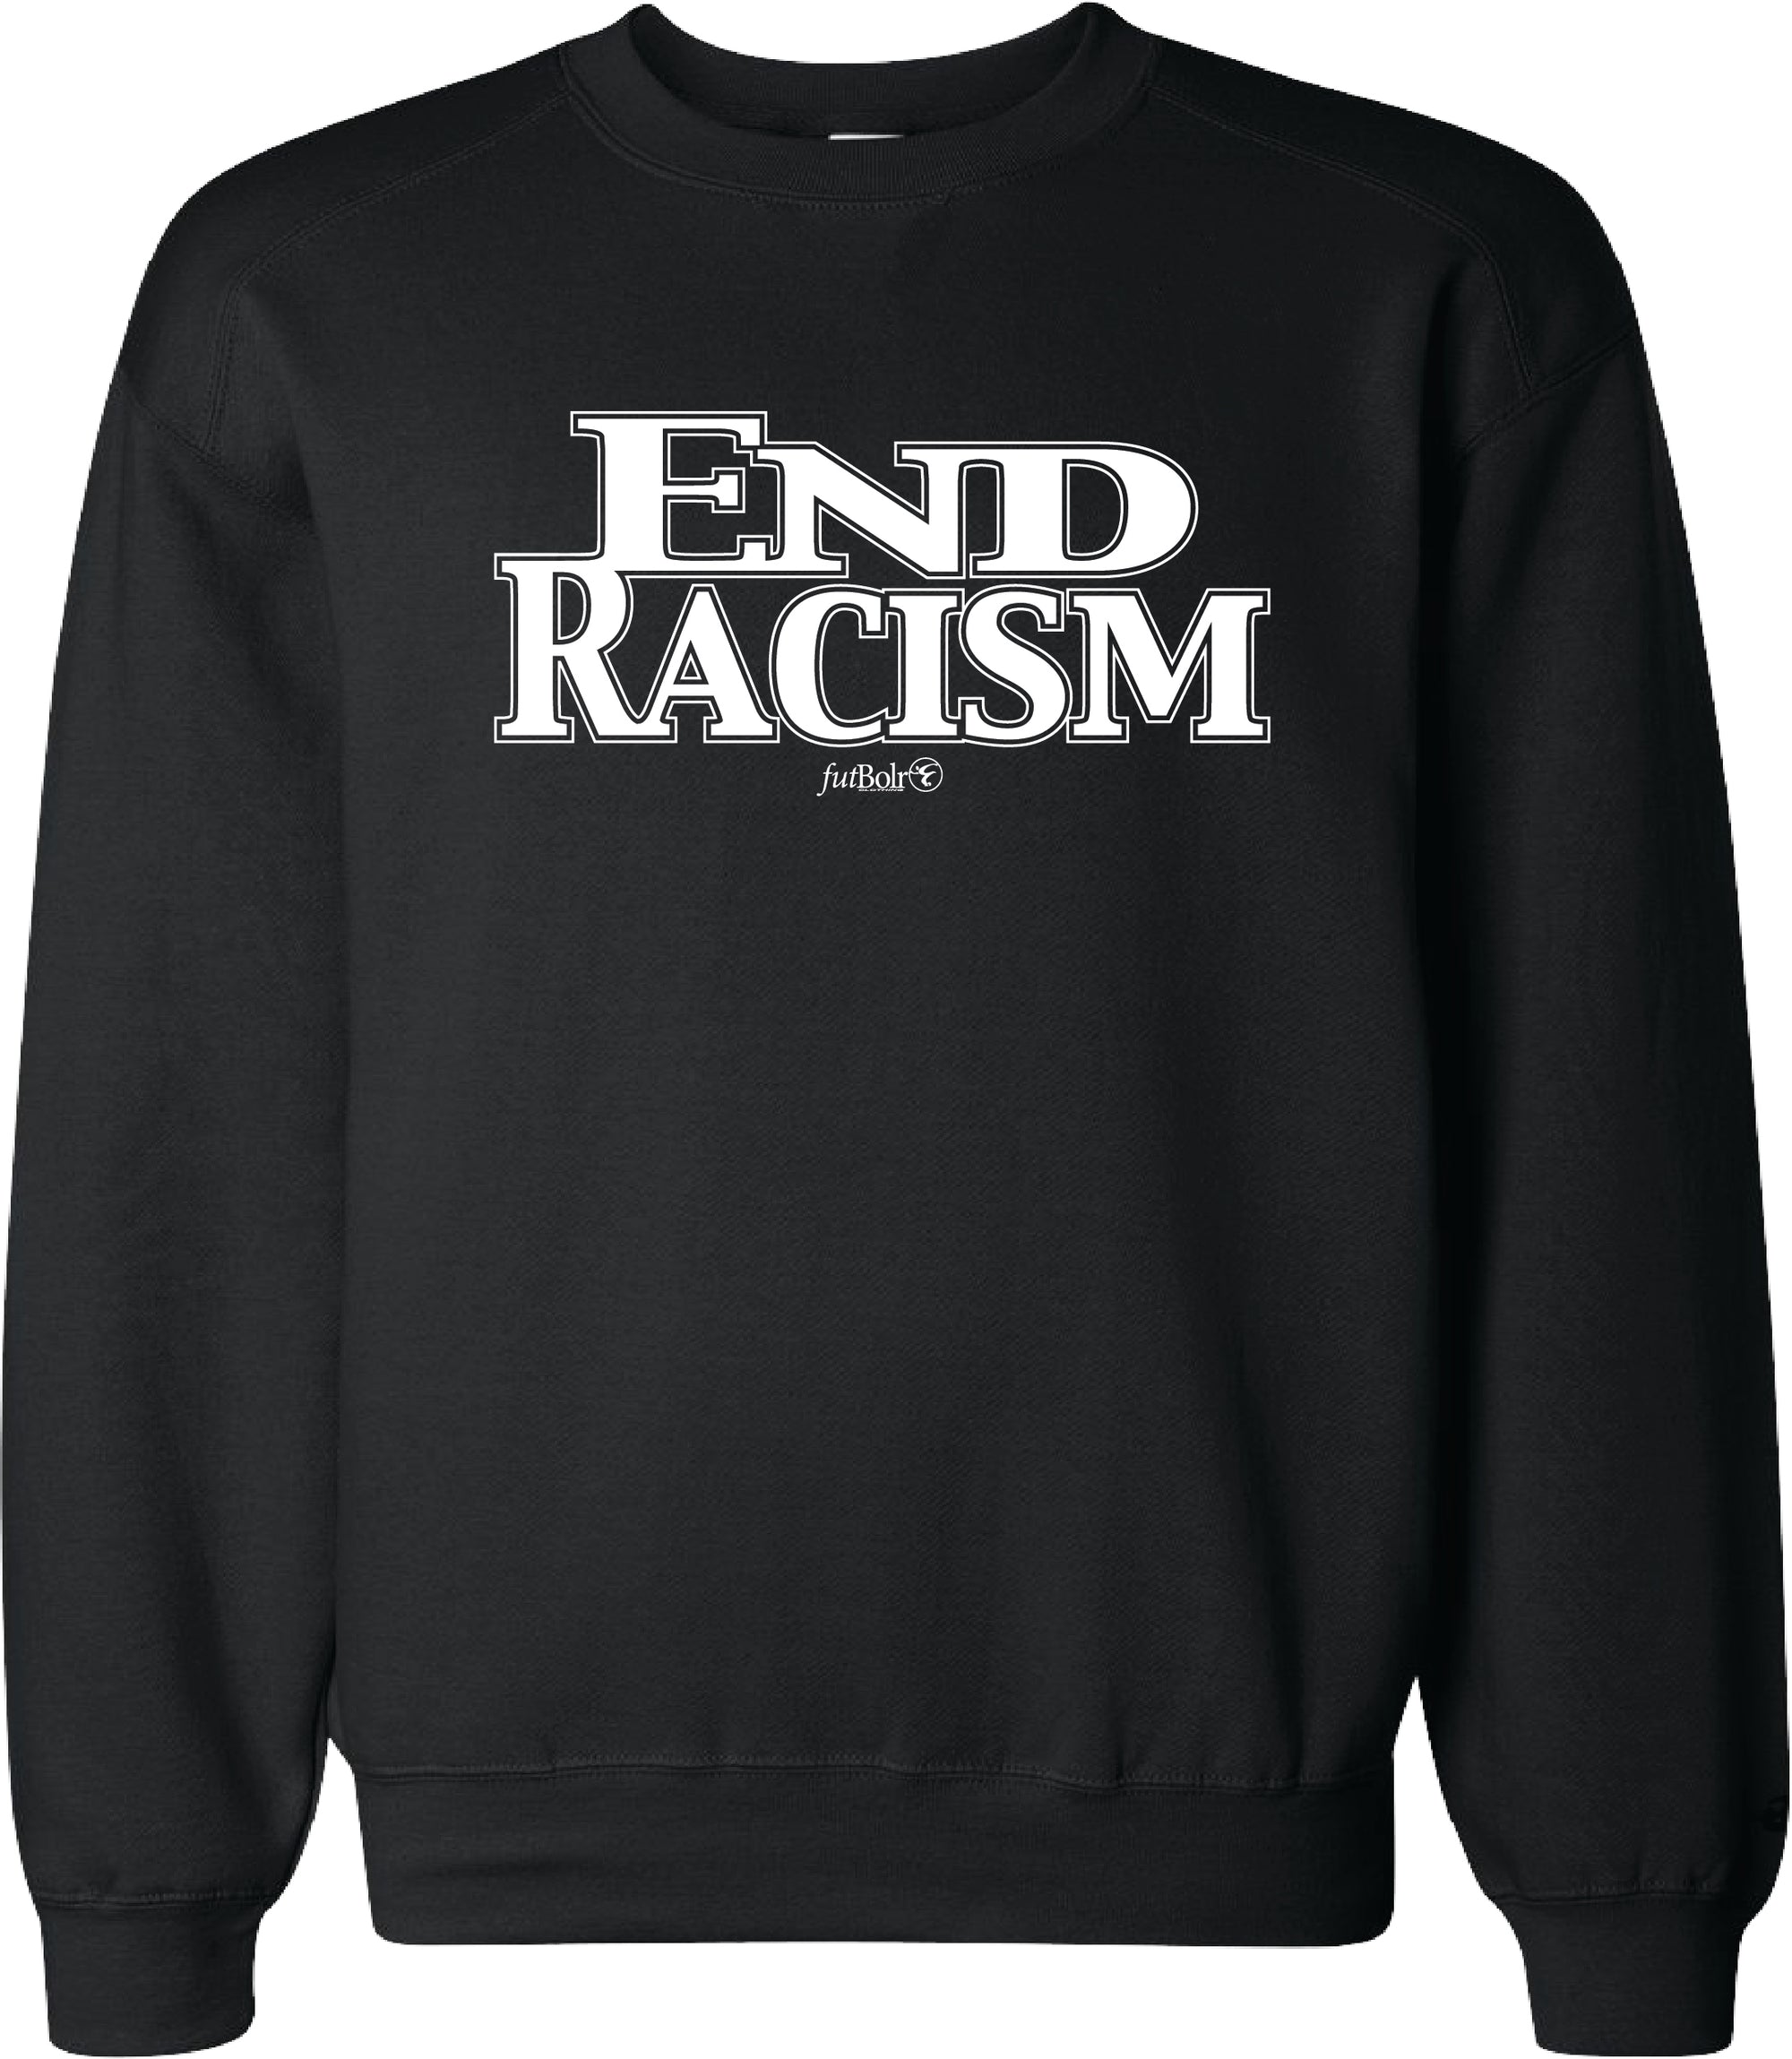 End Racism Crew Neck Sweatshirts